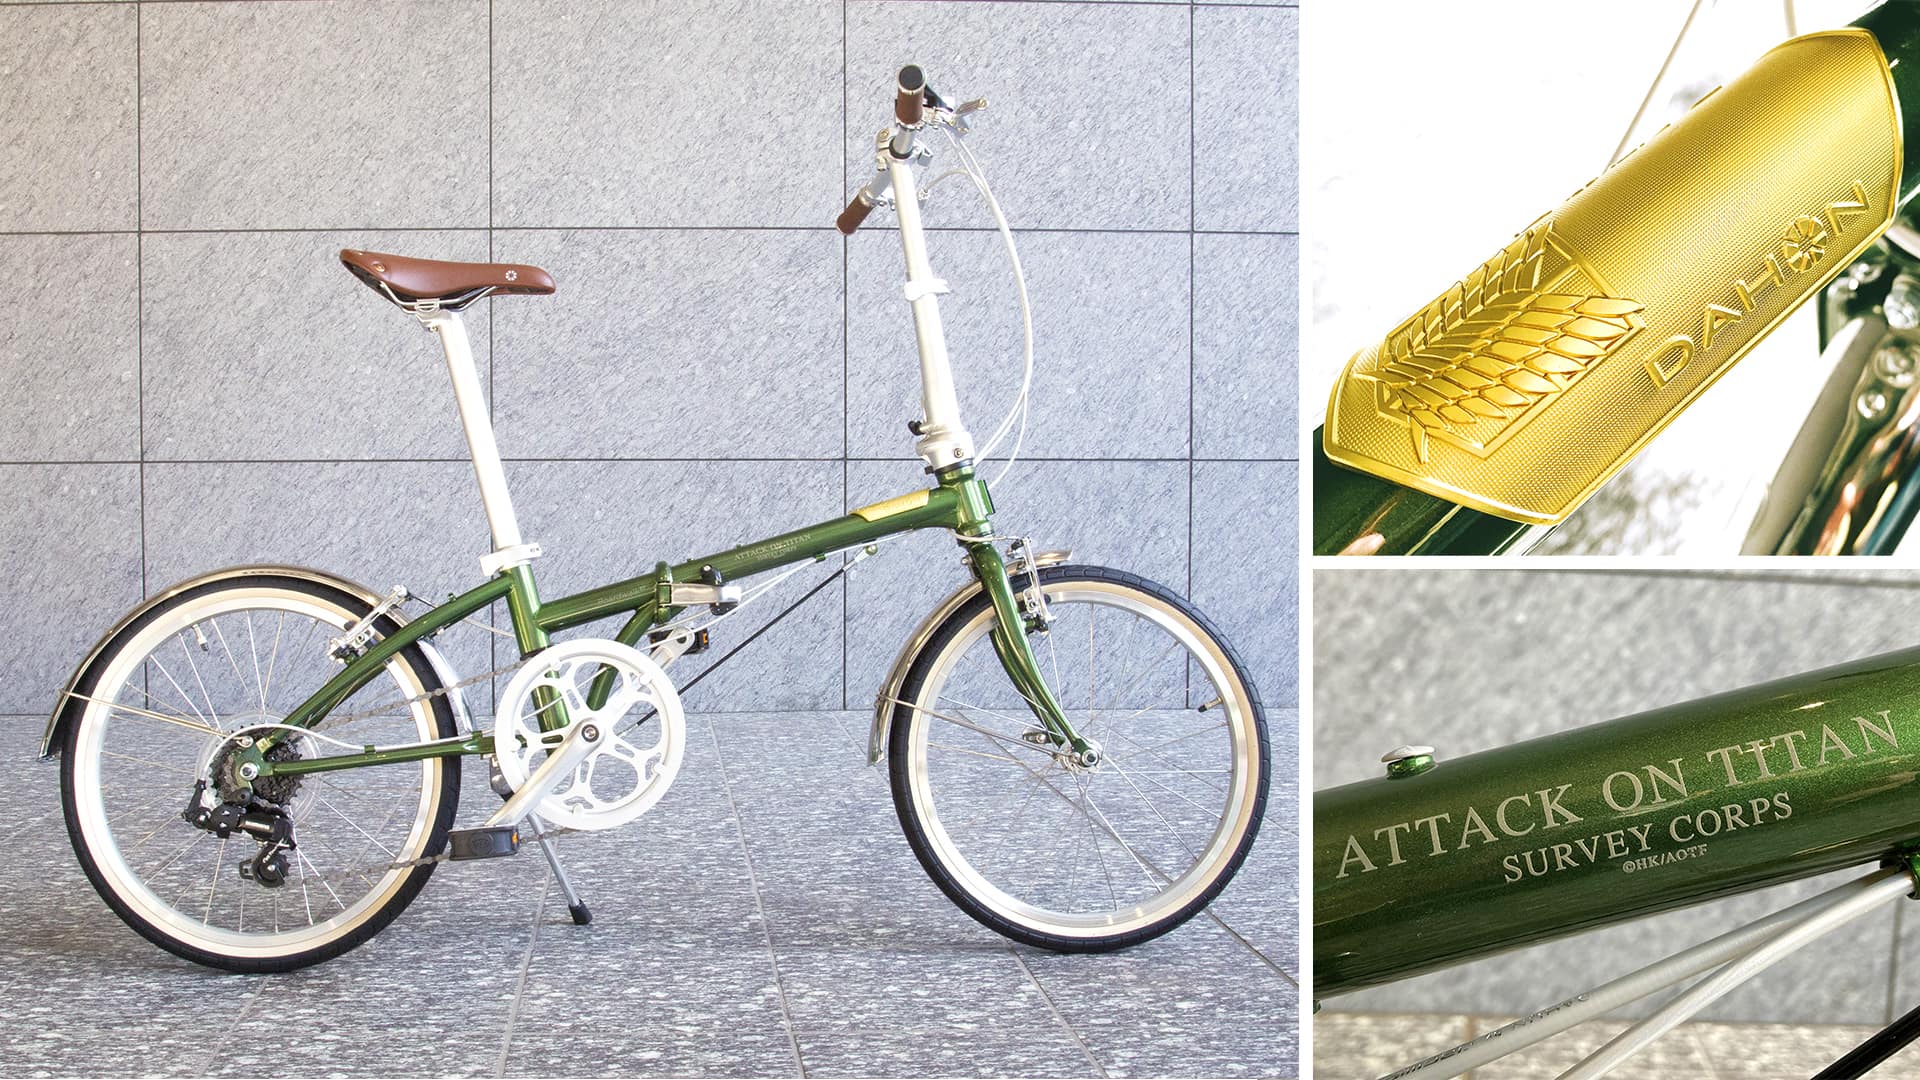 Ryokotomo - f680713a attack on titan inspires collaboration folding bike from dahon